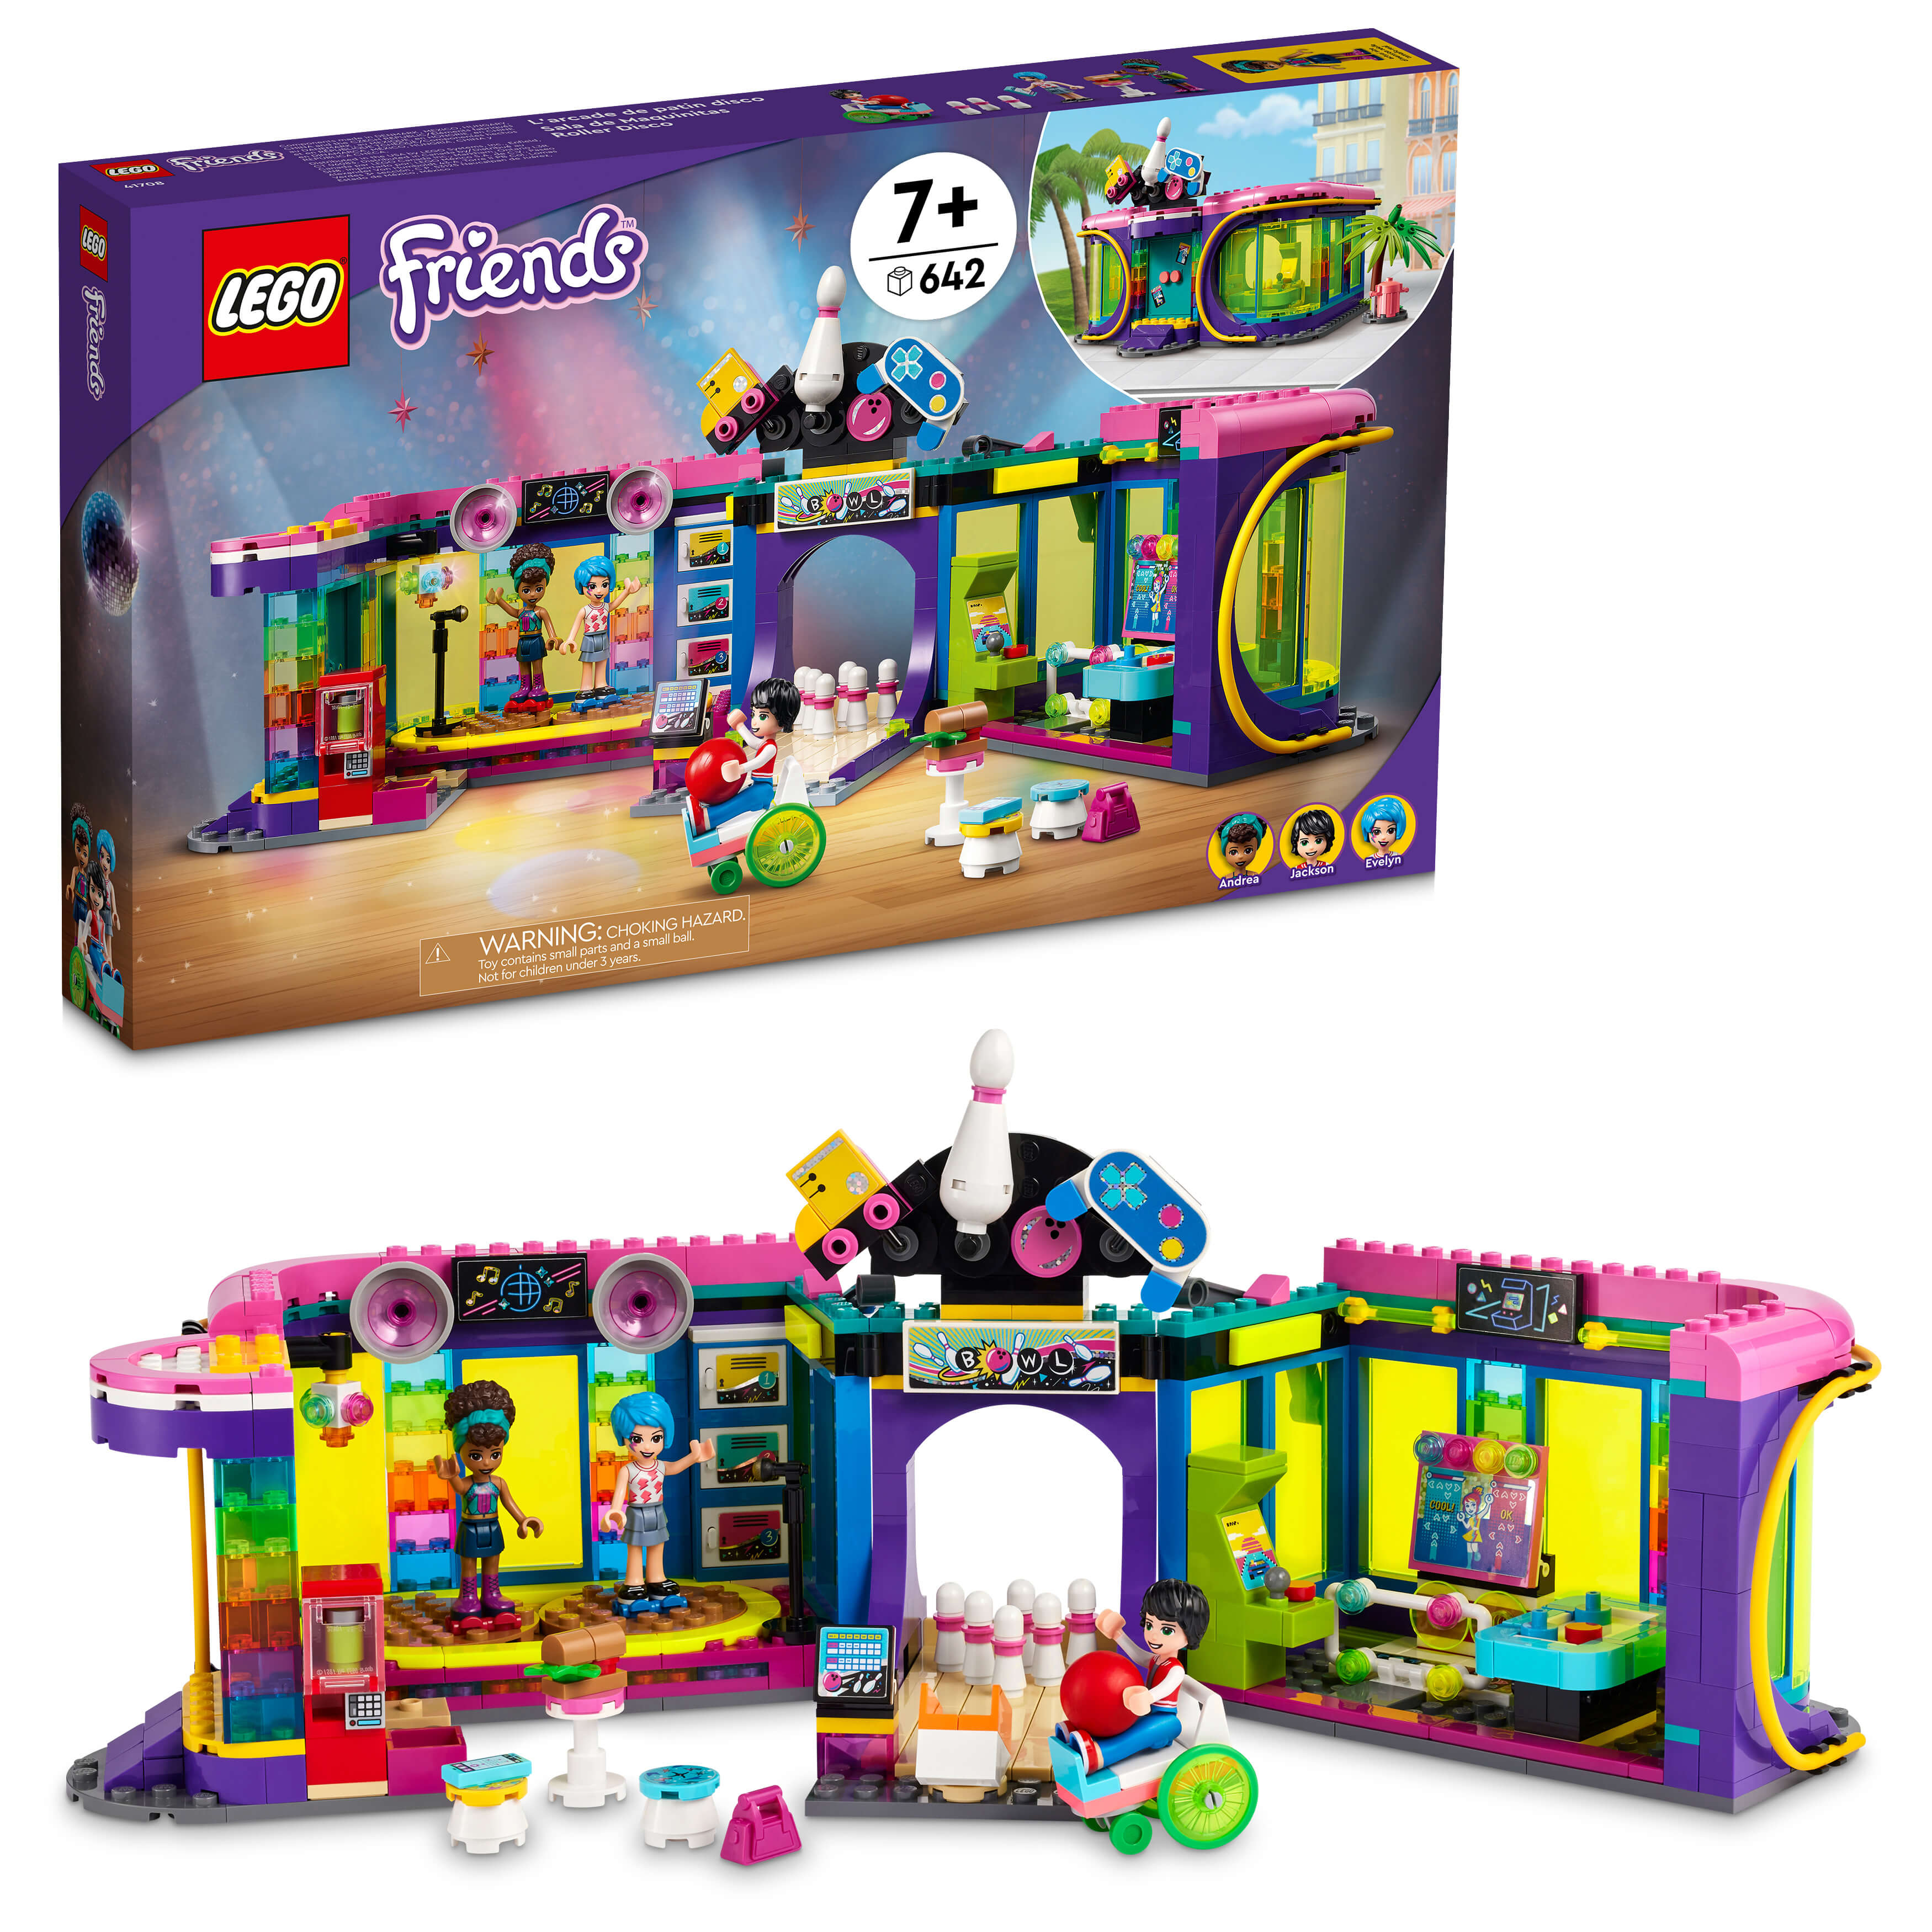 LEGO® Friends Roller Disco Arcade 41708 Building Kit (642 Pieces)